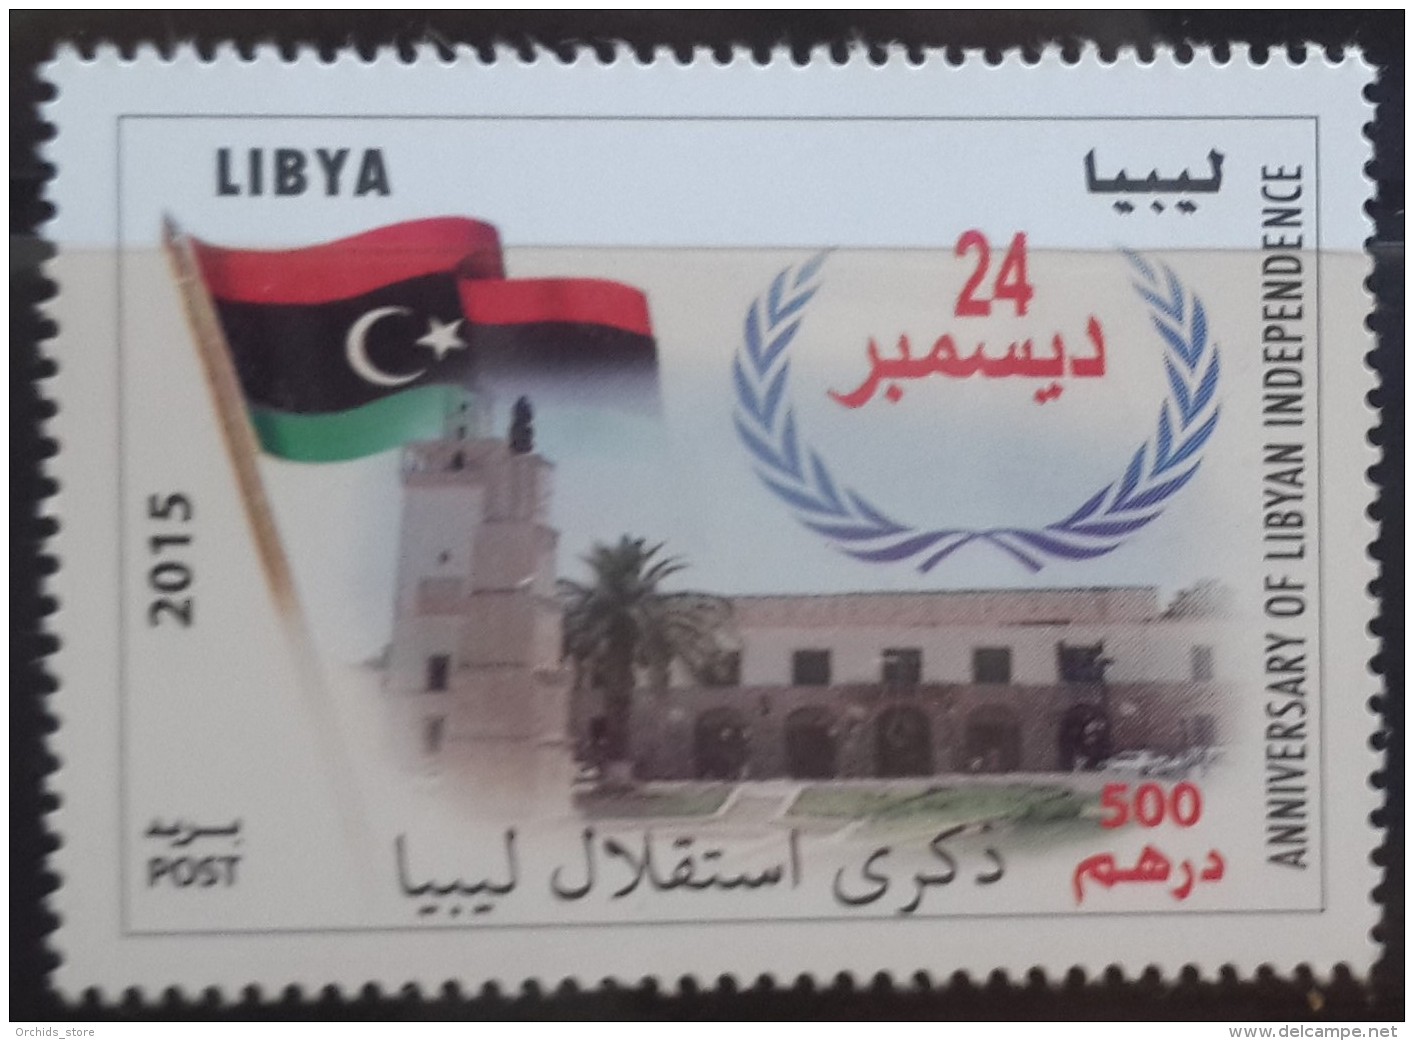 Libya 2015 NEW MNH Stamp - Anniv Of Libyan Independence - Flag - Libya